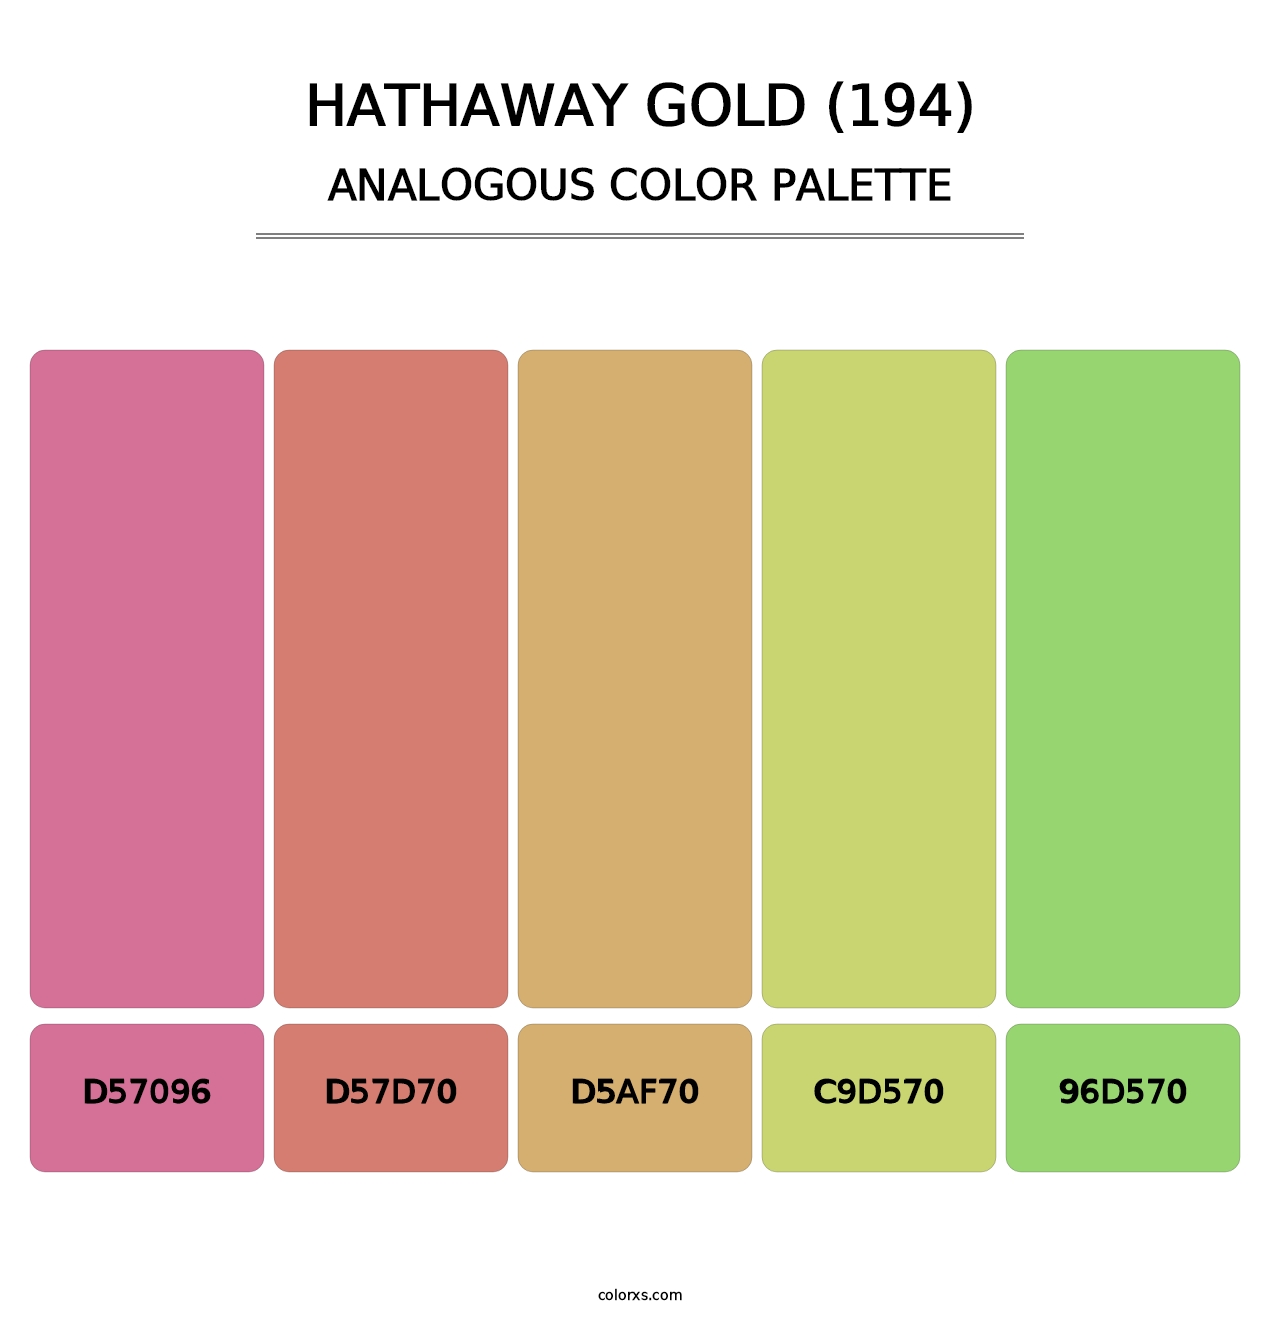 Hathaway Gold (194) - Analogous Color Palette